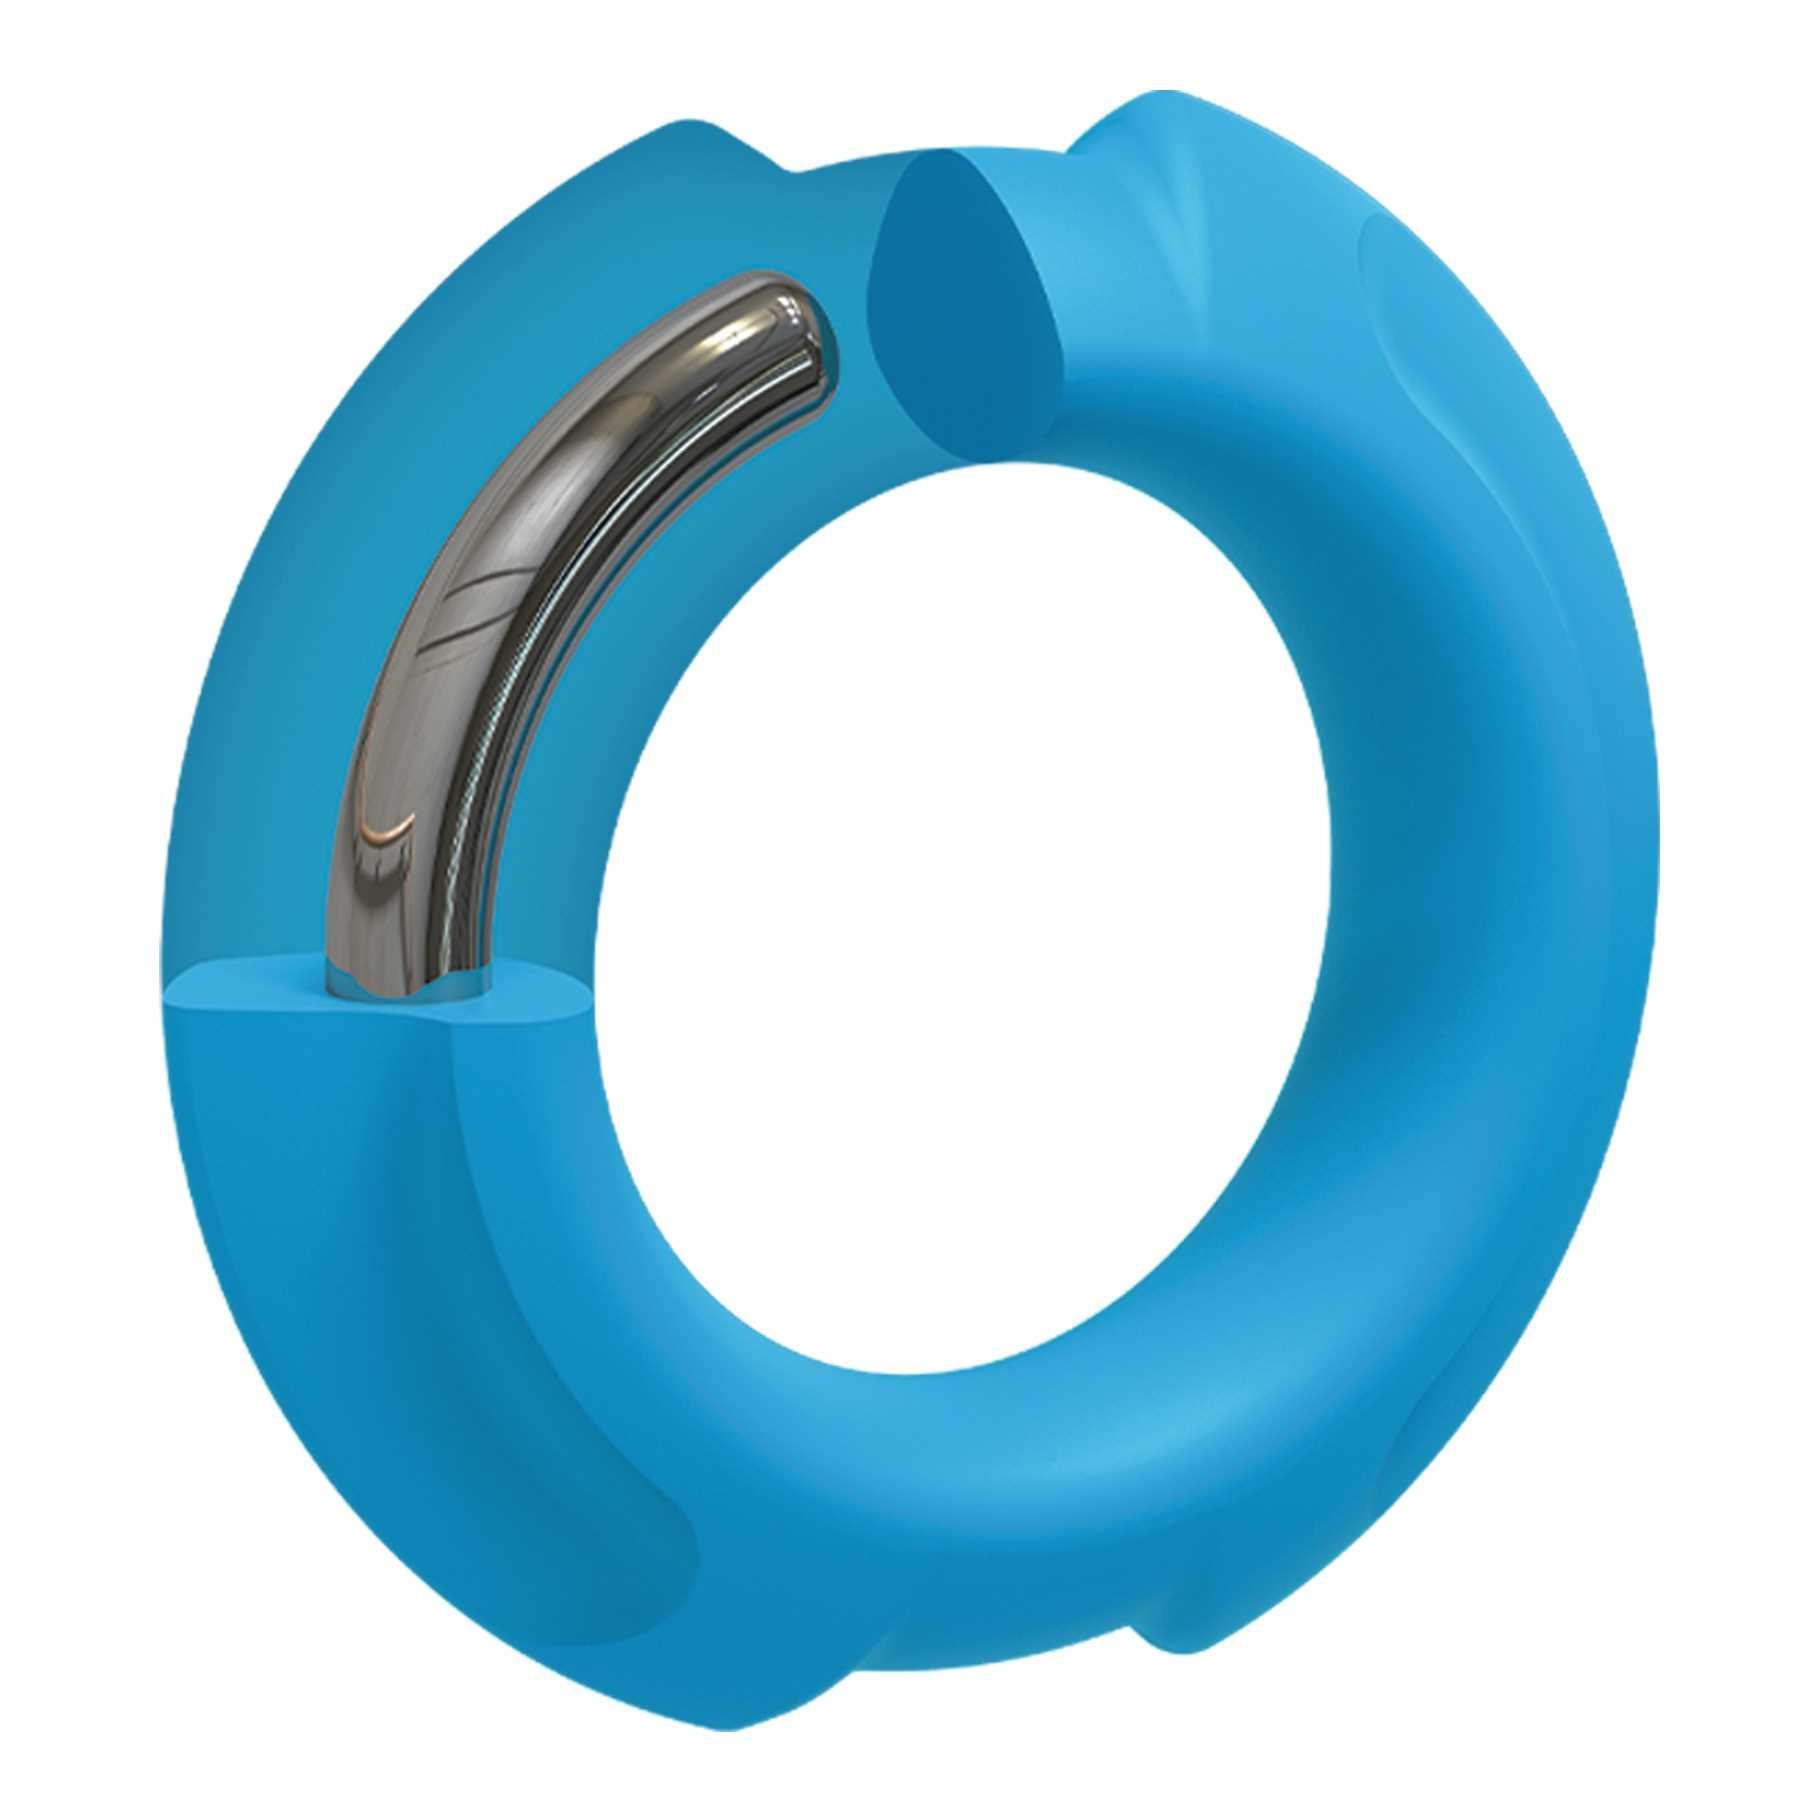 OptiMALE FlexiSteel C-Ring blue small showing inner steel core